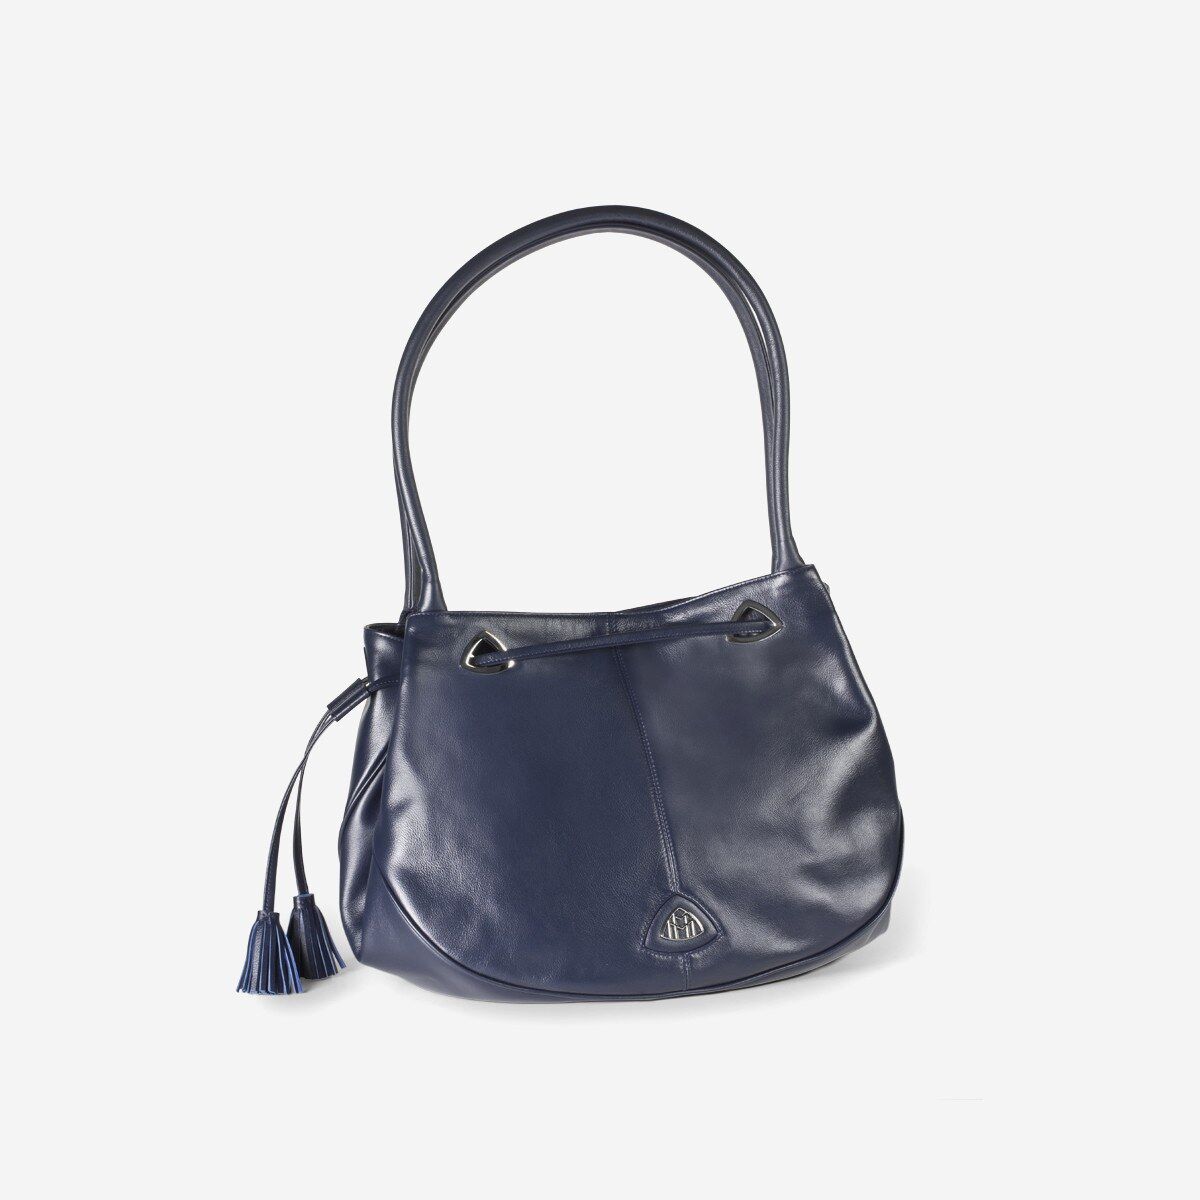 Giani Bernini Solid Colored Burgundy Shoulder Bag One Size - 77% off